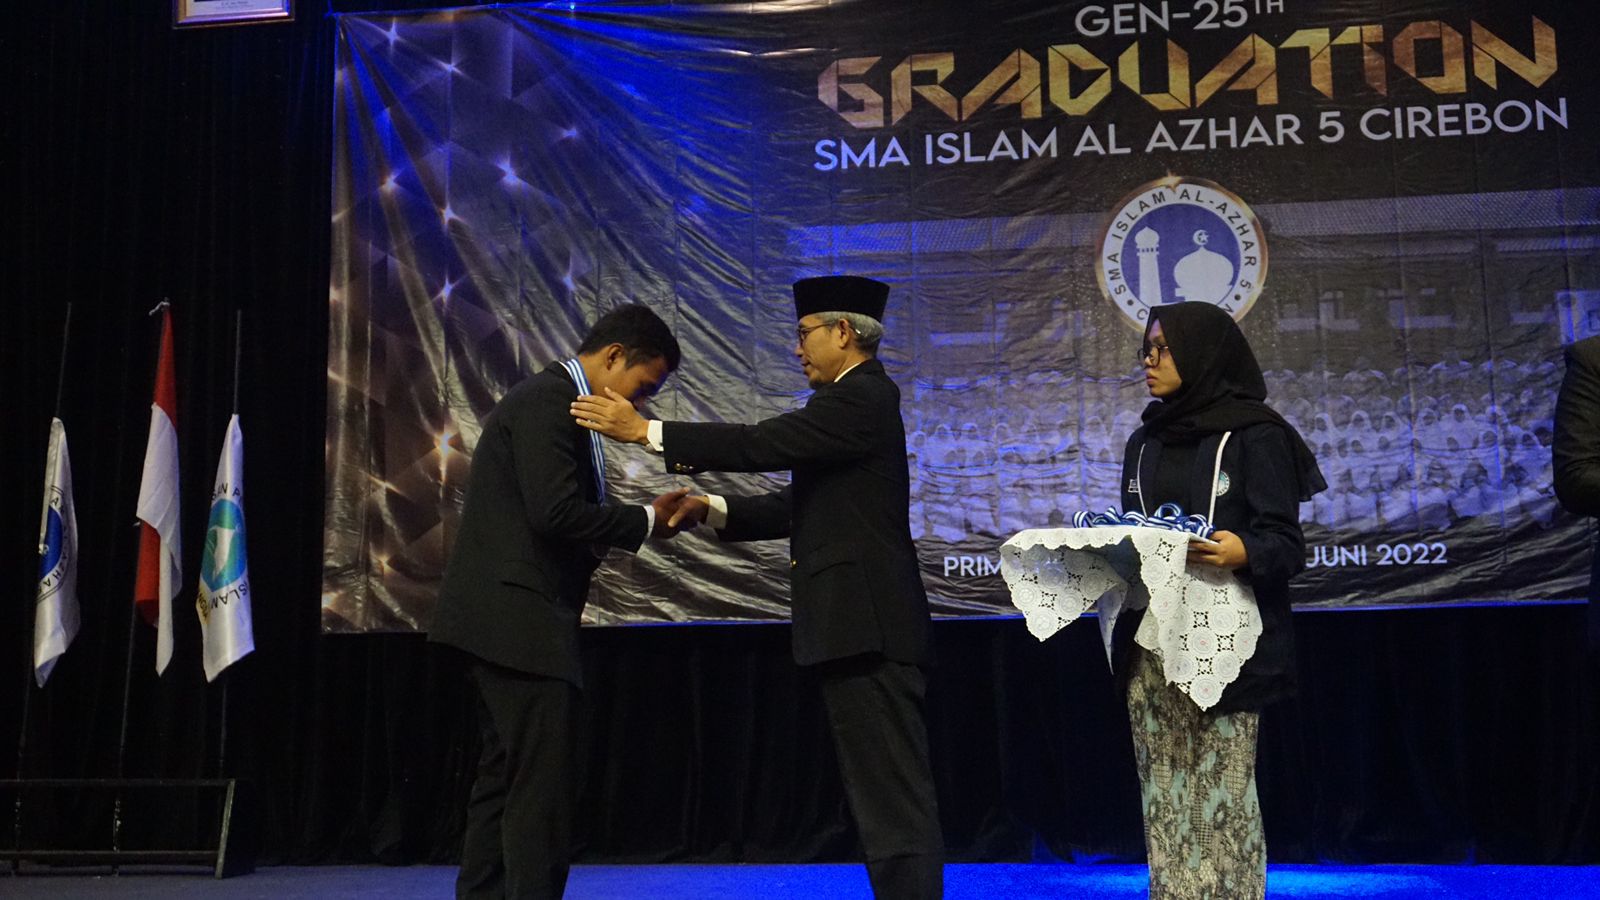 Gen-25 Th. Graduation SMA Islam Al Azhar 5 Cirebon